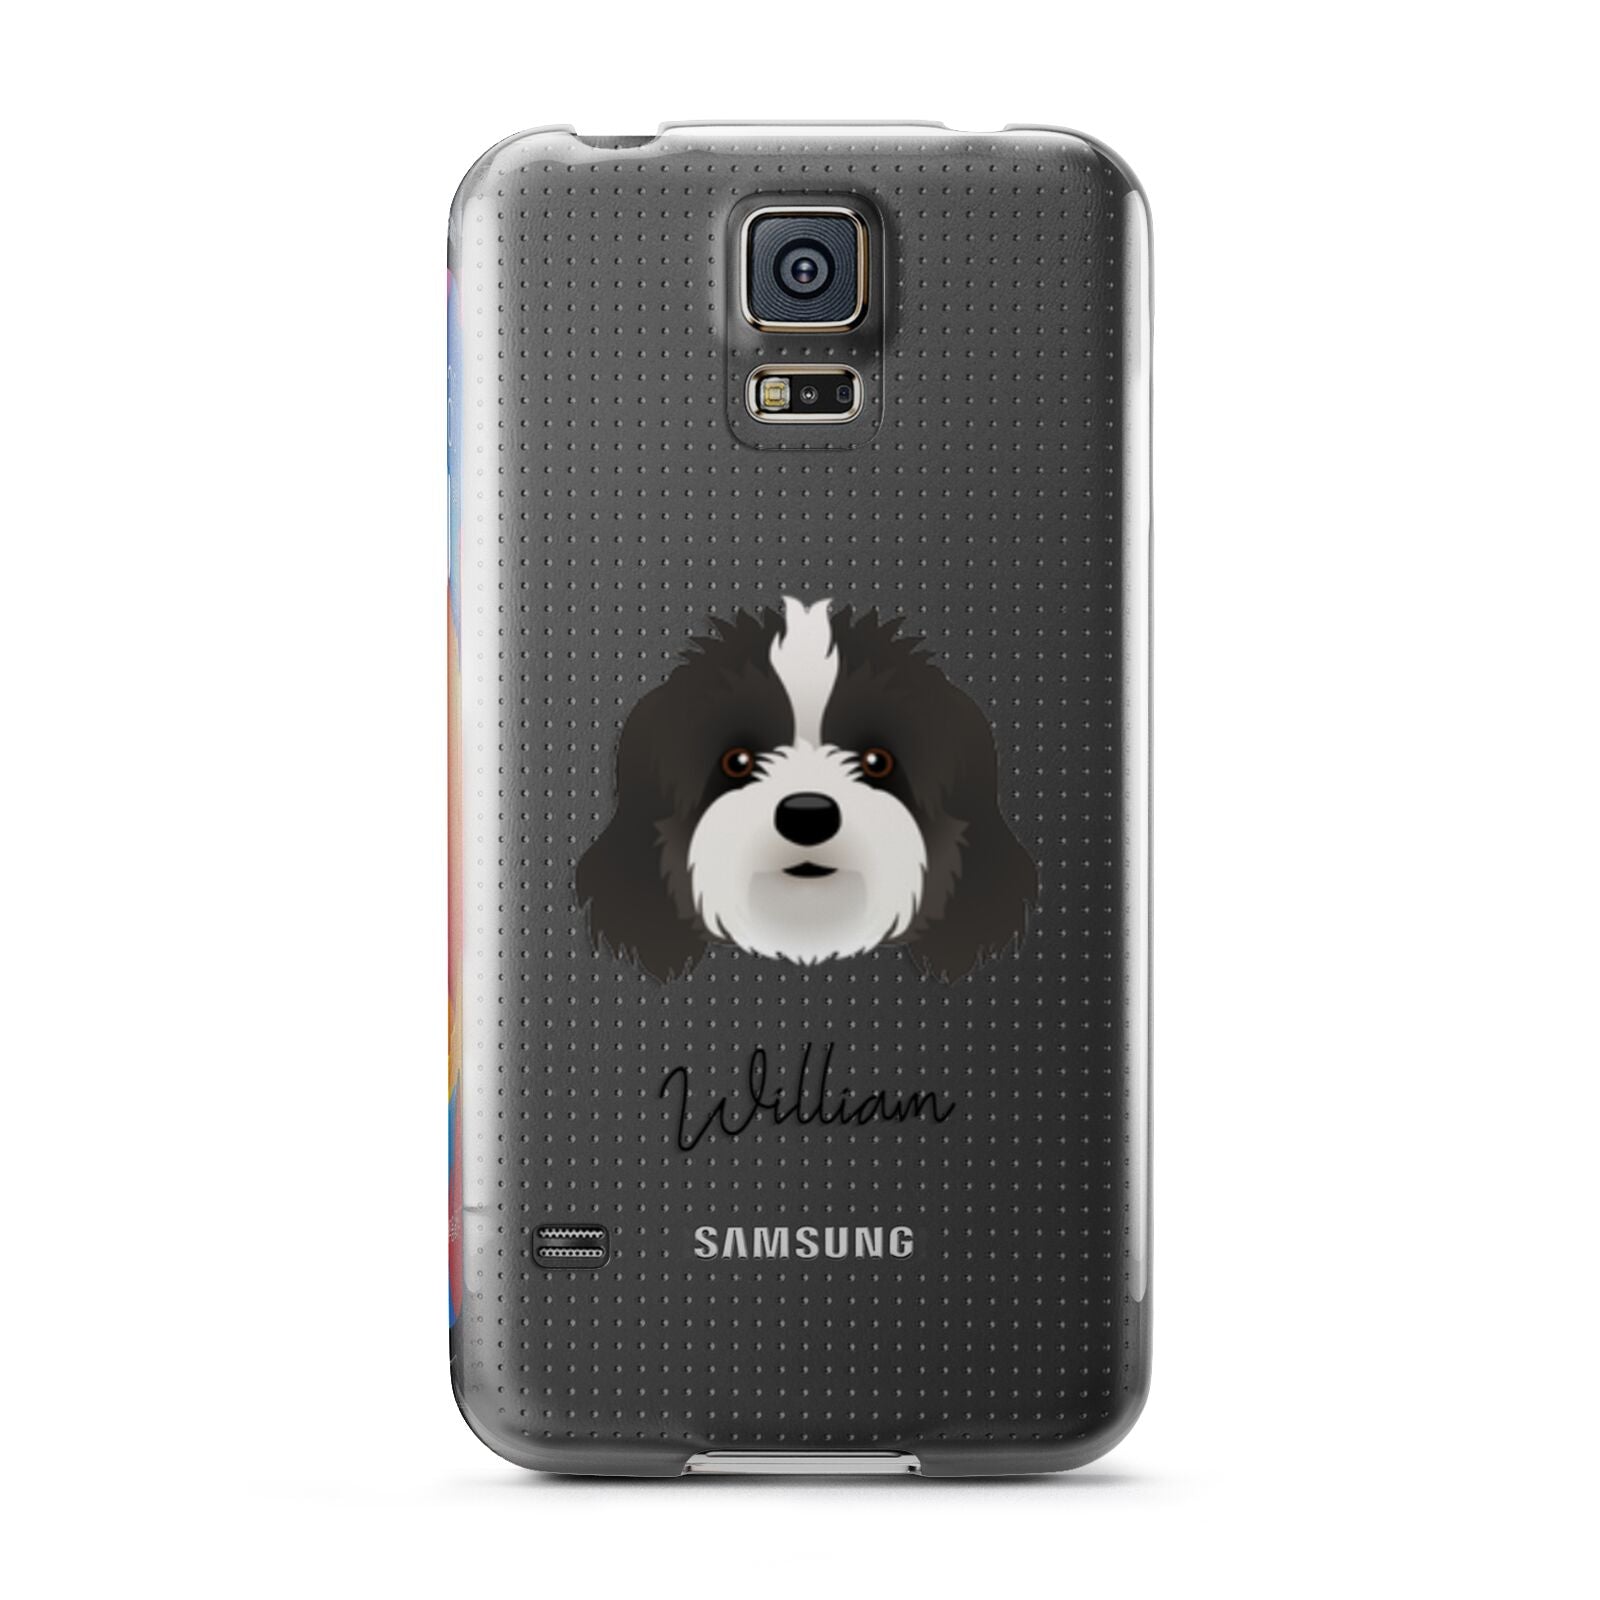 Cavapoo Personalised Samsung Galaxy S5 Case